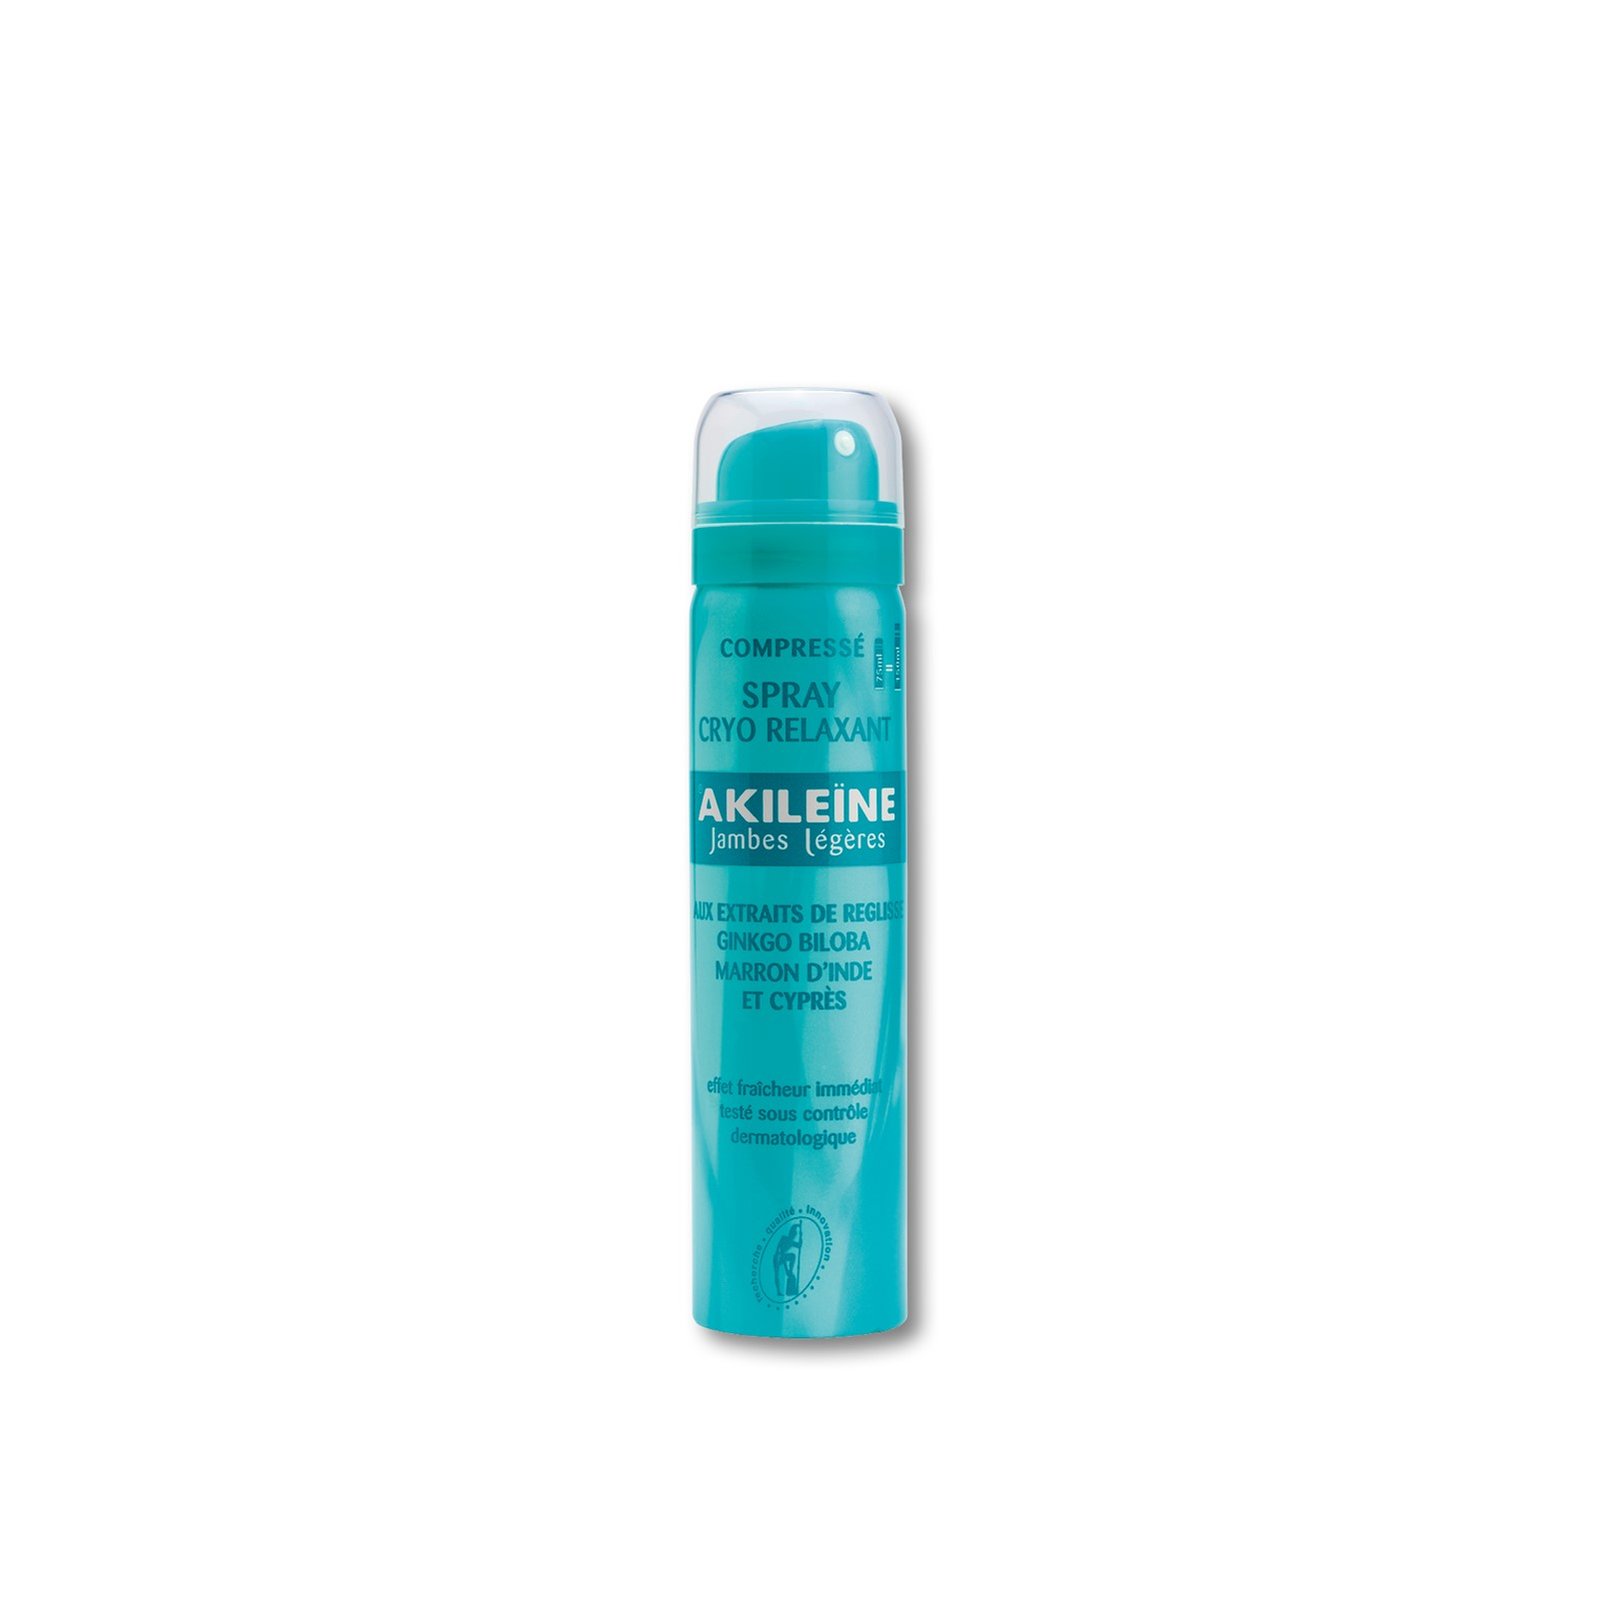 Akileine Cryo-Relaxing Spray for Tired Legs 75ml (2.53 fl oz)